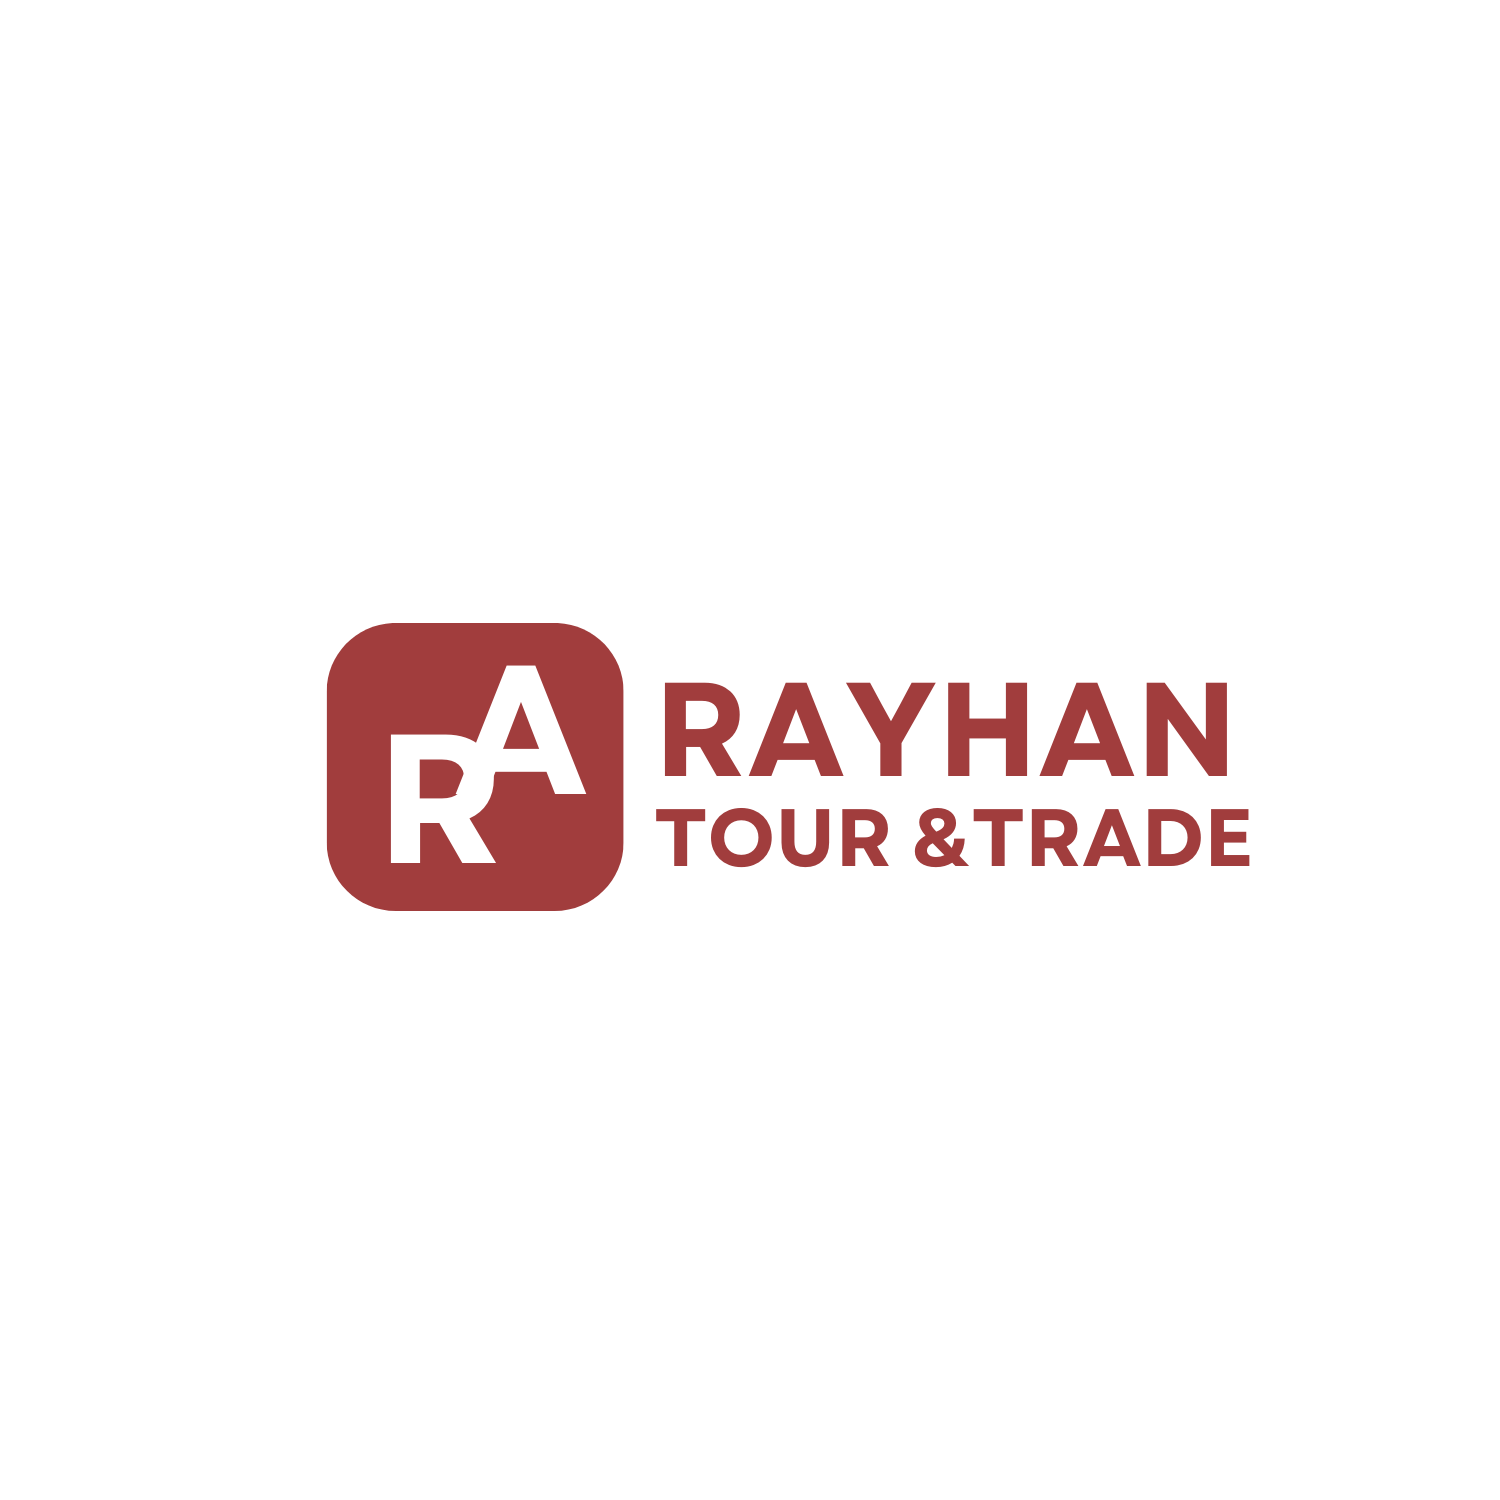 RAYHAN TOUR & TRADE